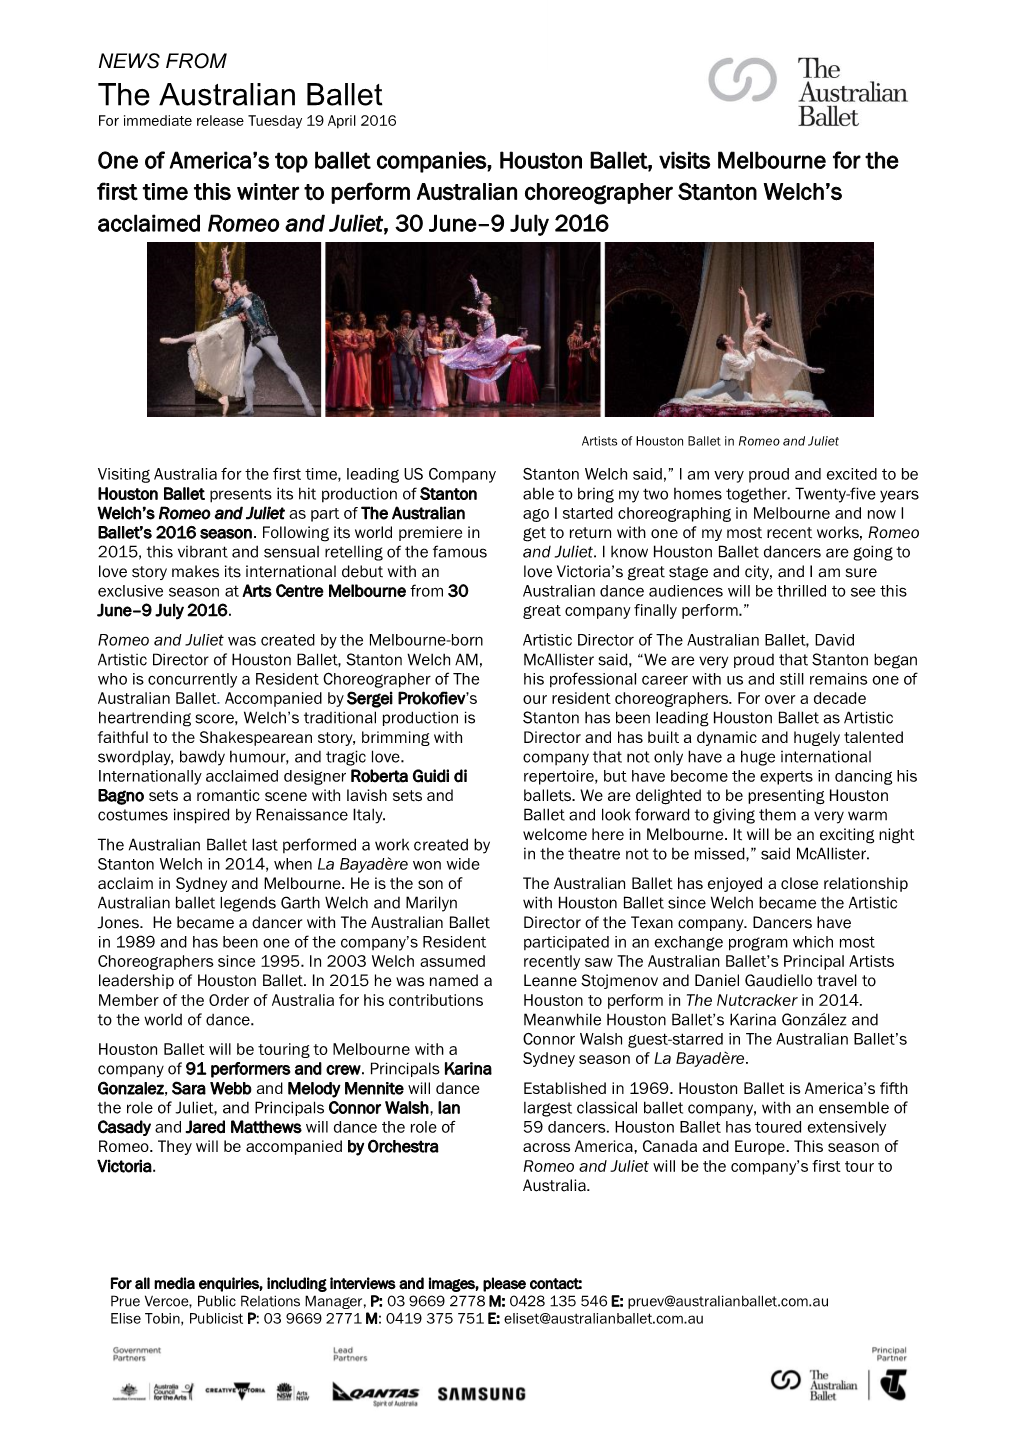 The Australian Ballet for Immediate Release Tuesday 19 April 2016